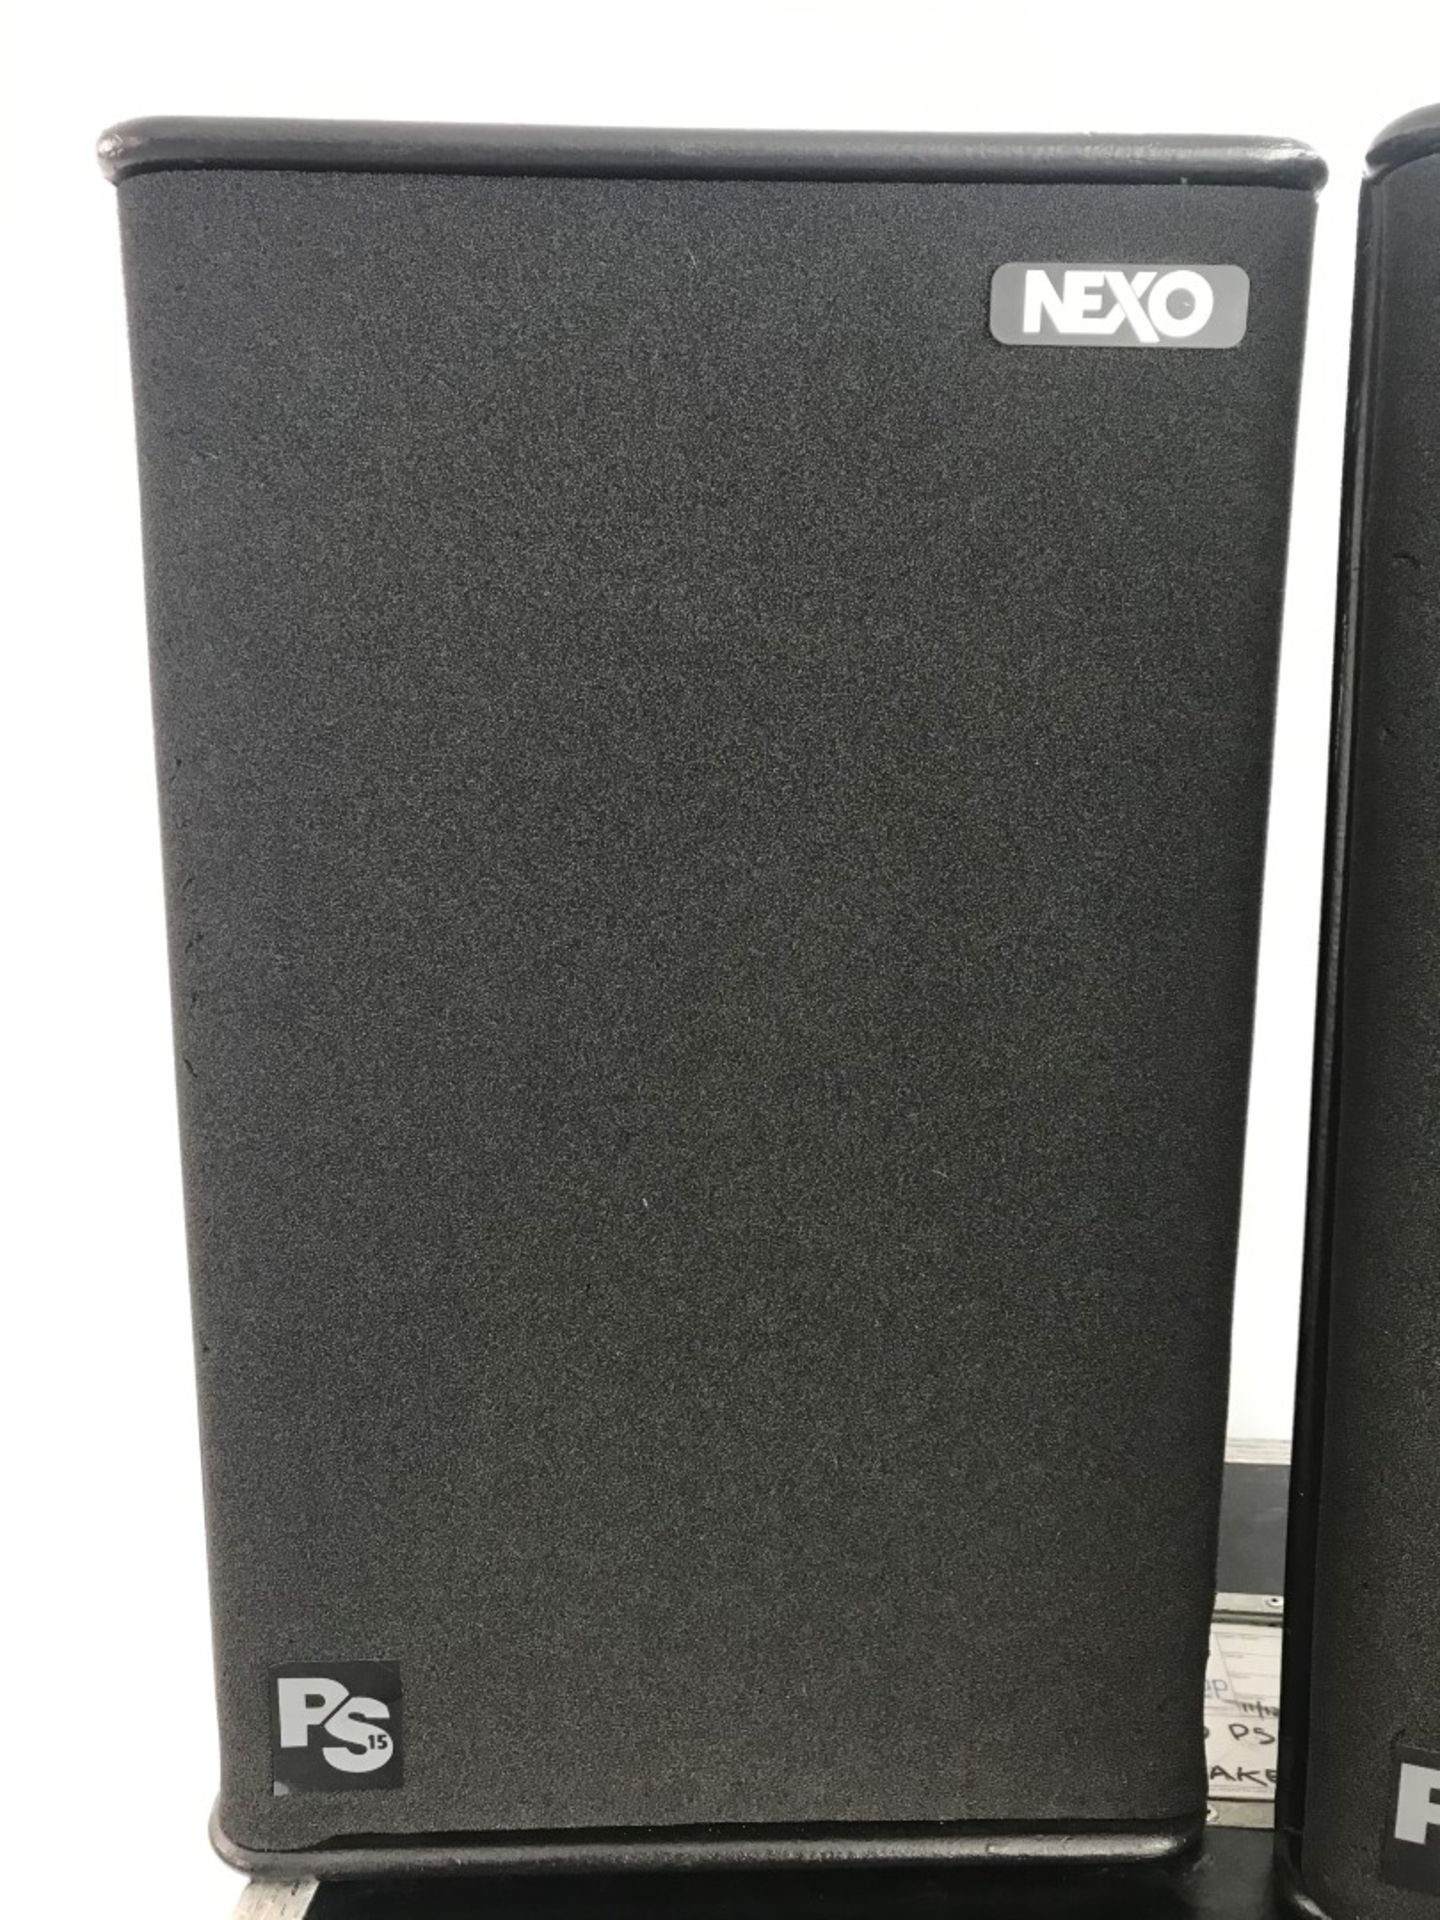 2 x Nexo PS15 Speakers (pair of) In Dual Flight Case - Ref: 106 - CL581 - Location: Altrincham - Image 2 of 3